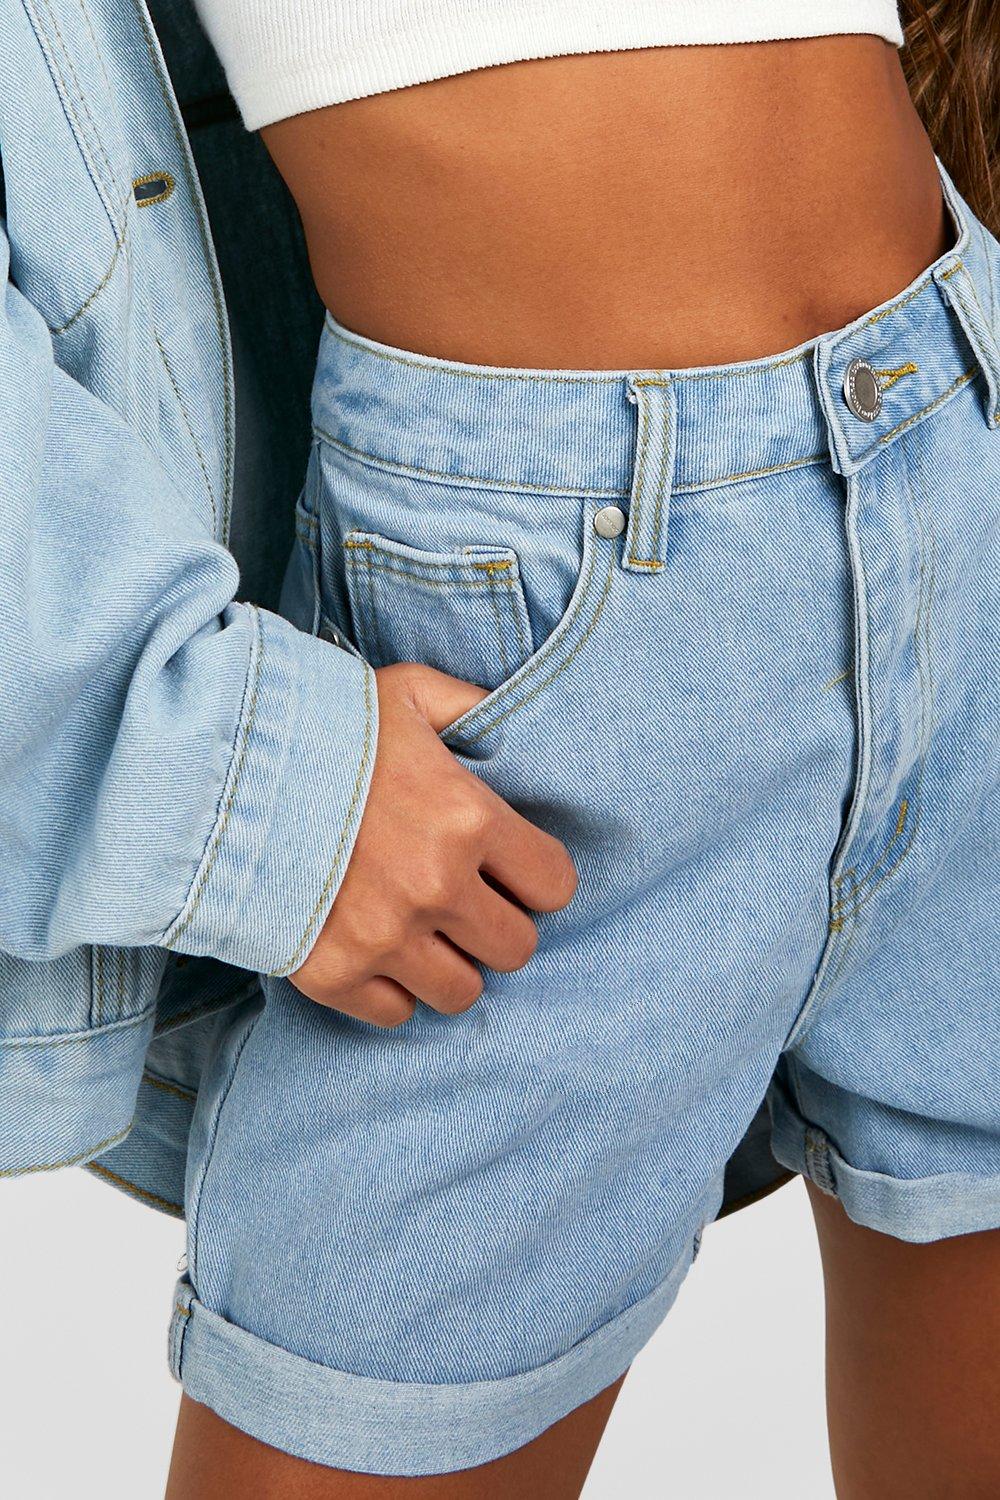 YUEHAO Jeans For Women Women Denim Jeans Low Waist Super Mini Shorts Pants  (Light blue)